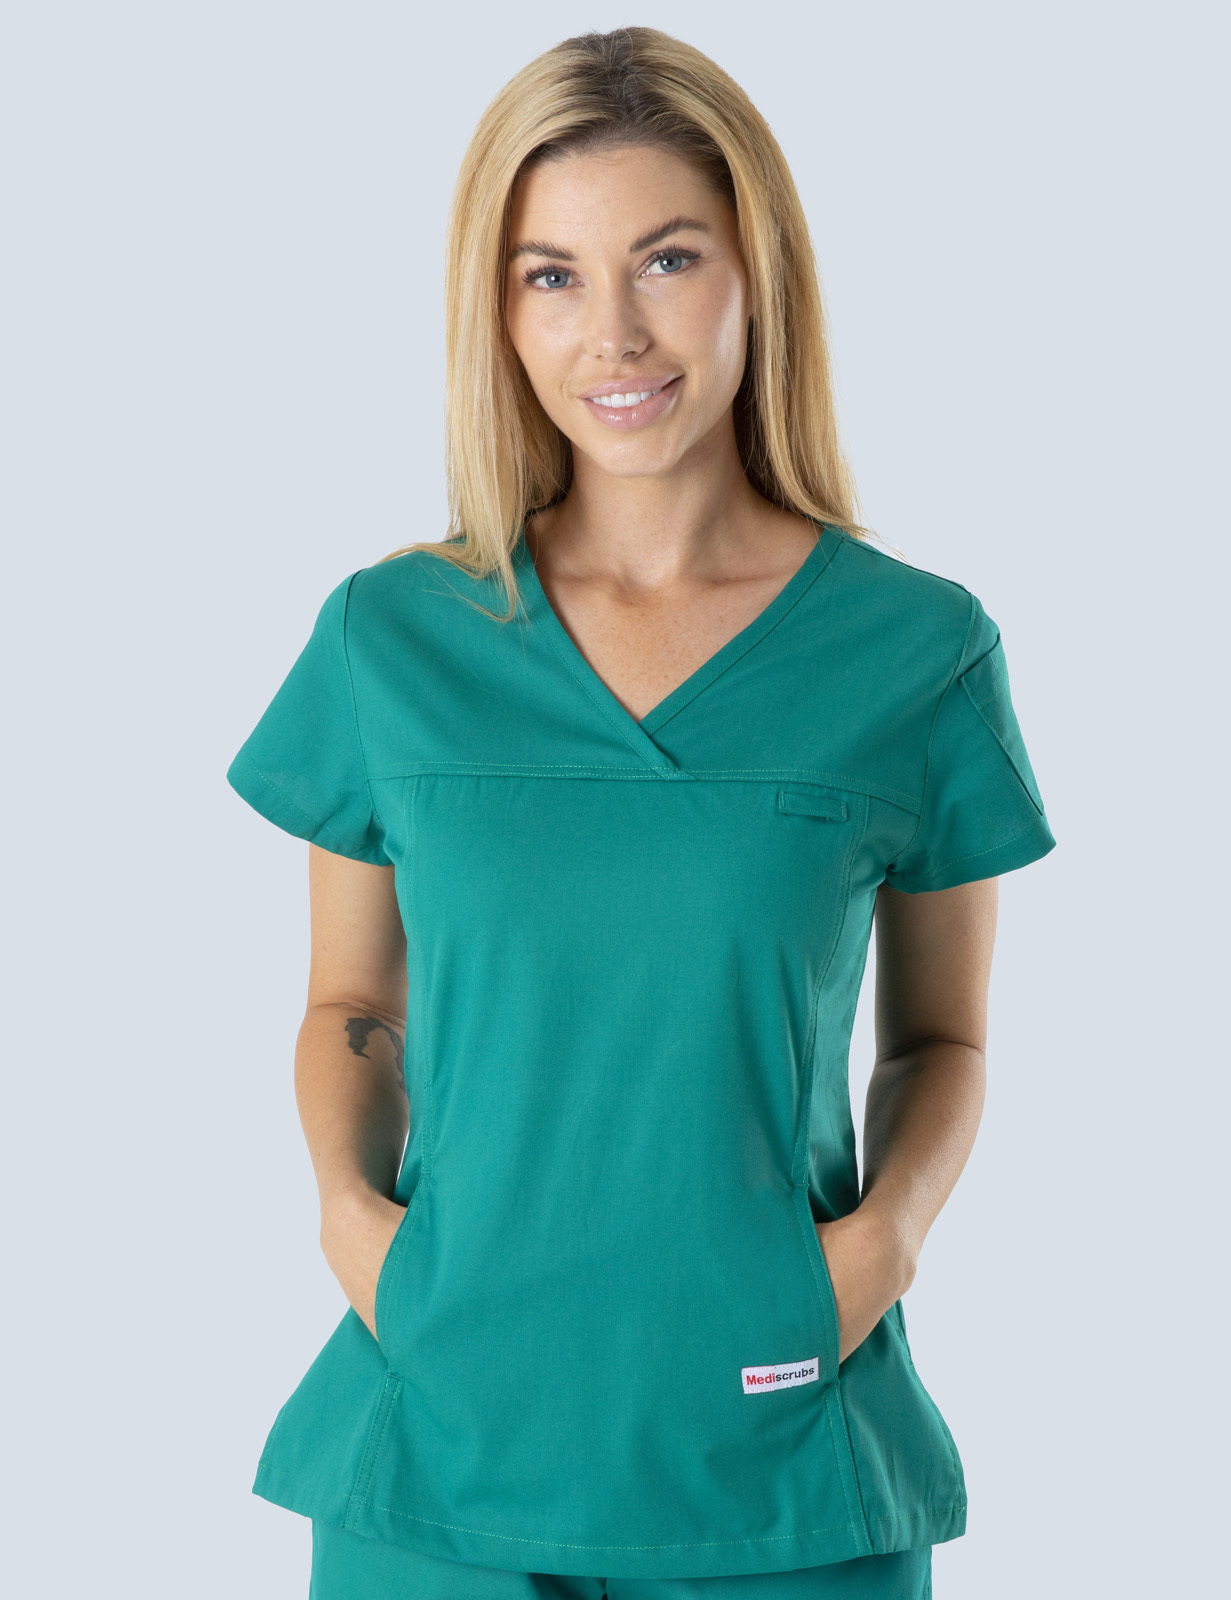 Queensland Children's Hospital Emergency Department Nurse Unit Manager Uniform Top Bundle  (Women's Fit Top in Hunter incl Logos)